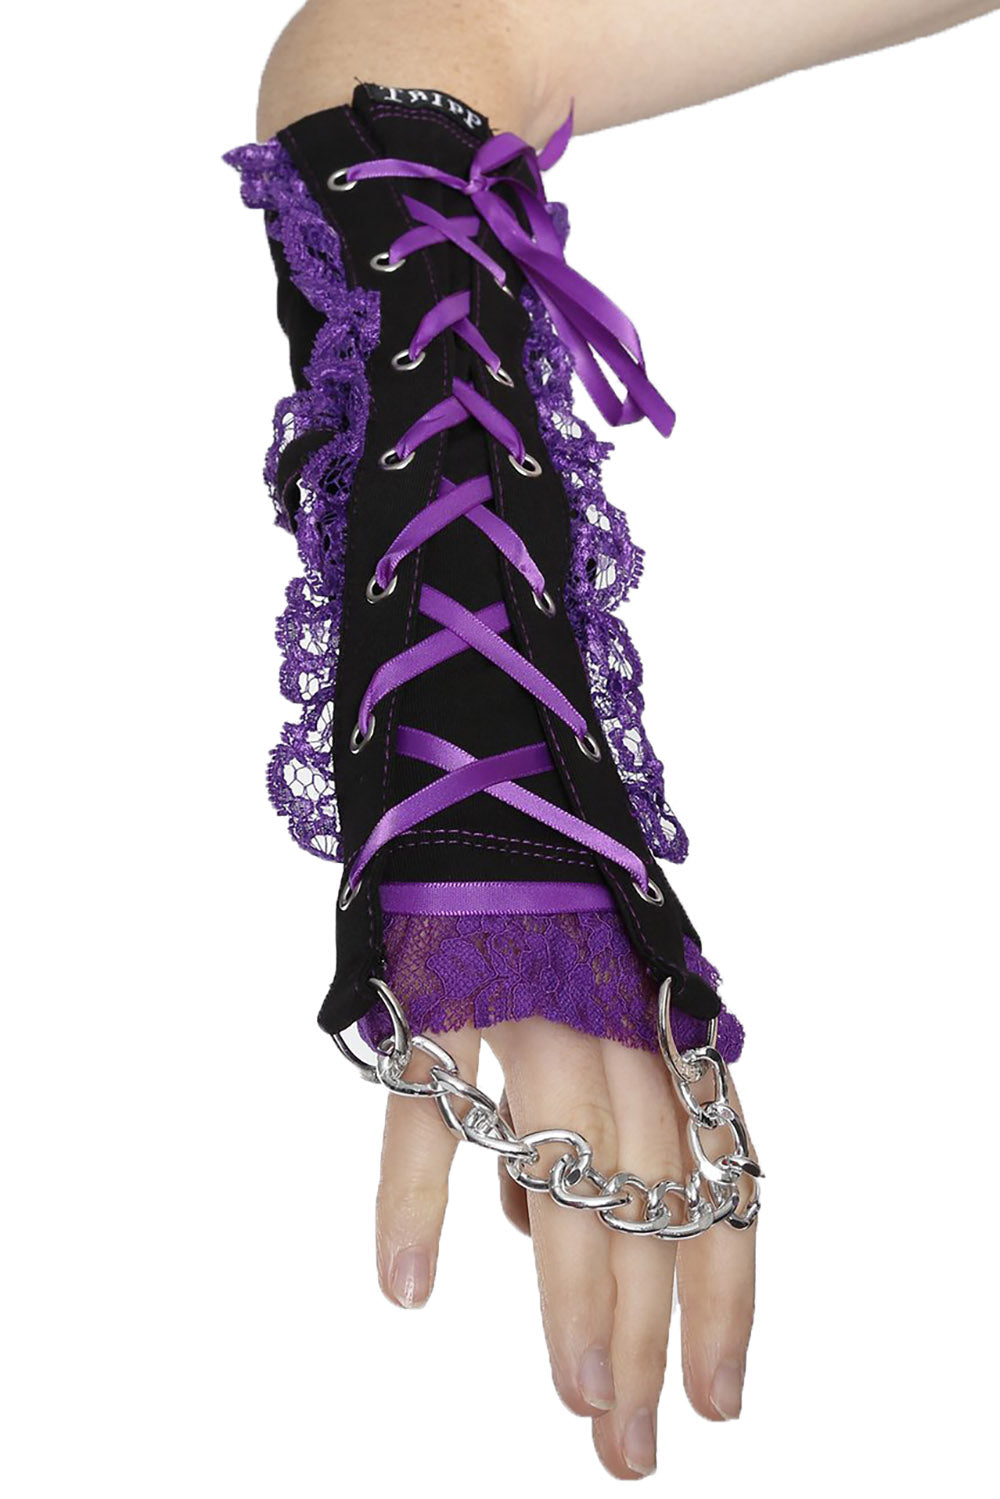 Tripp Lolita Lace and Chain Arm Warmers [Black/Purple]